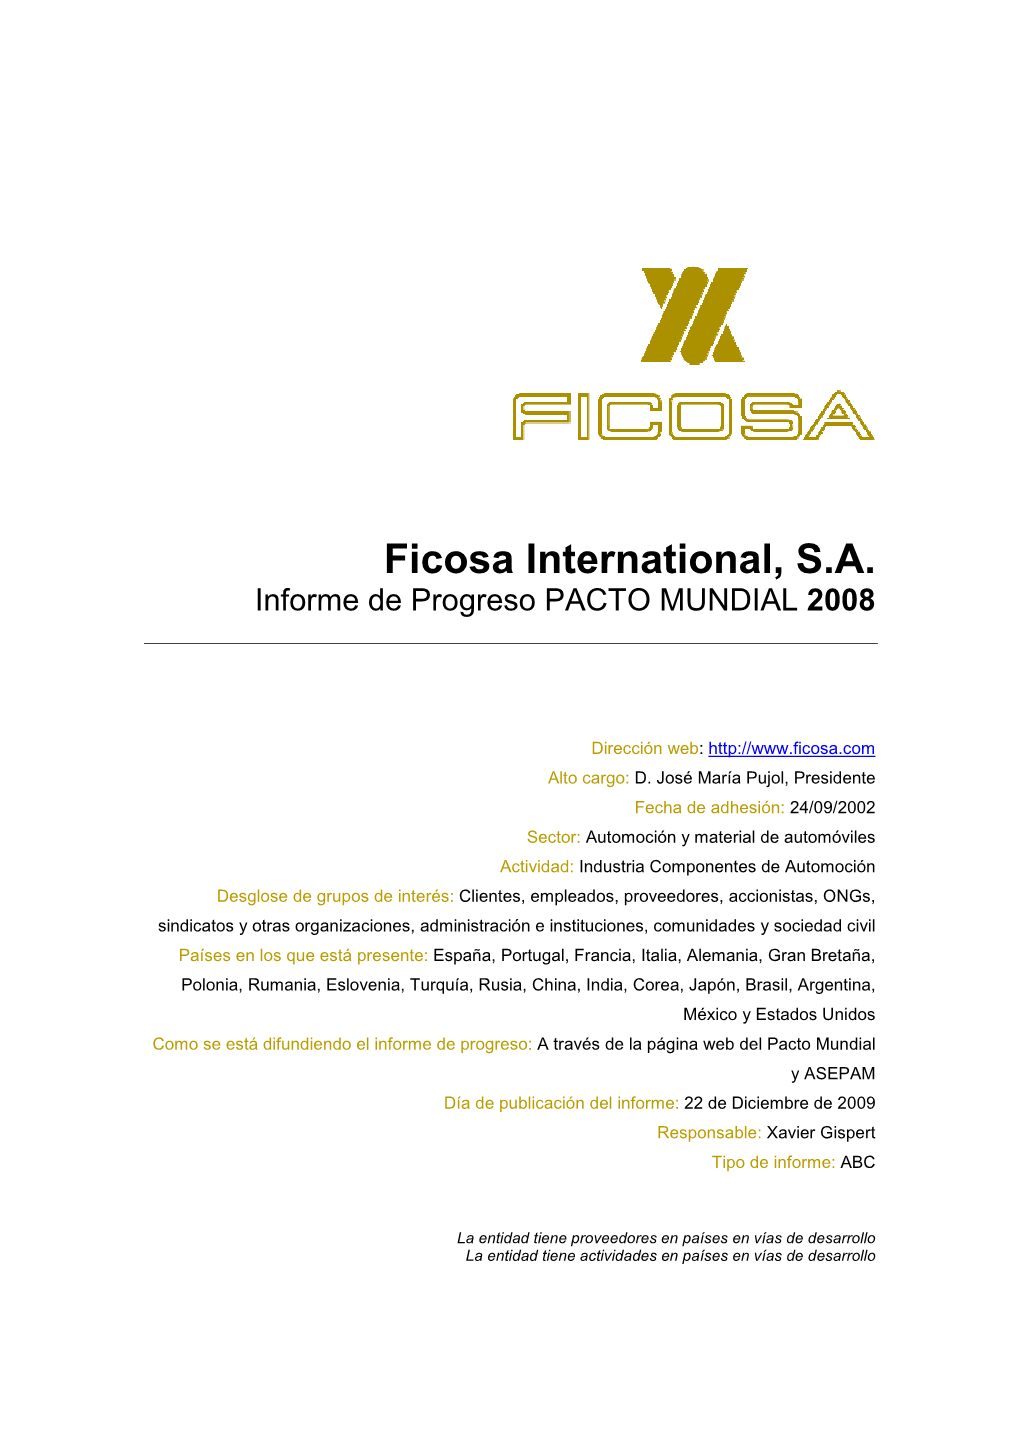 Ficosa International, S.A